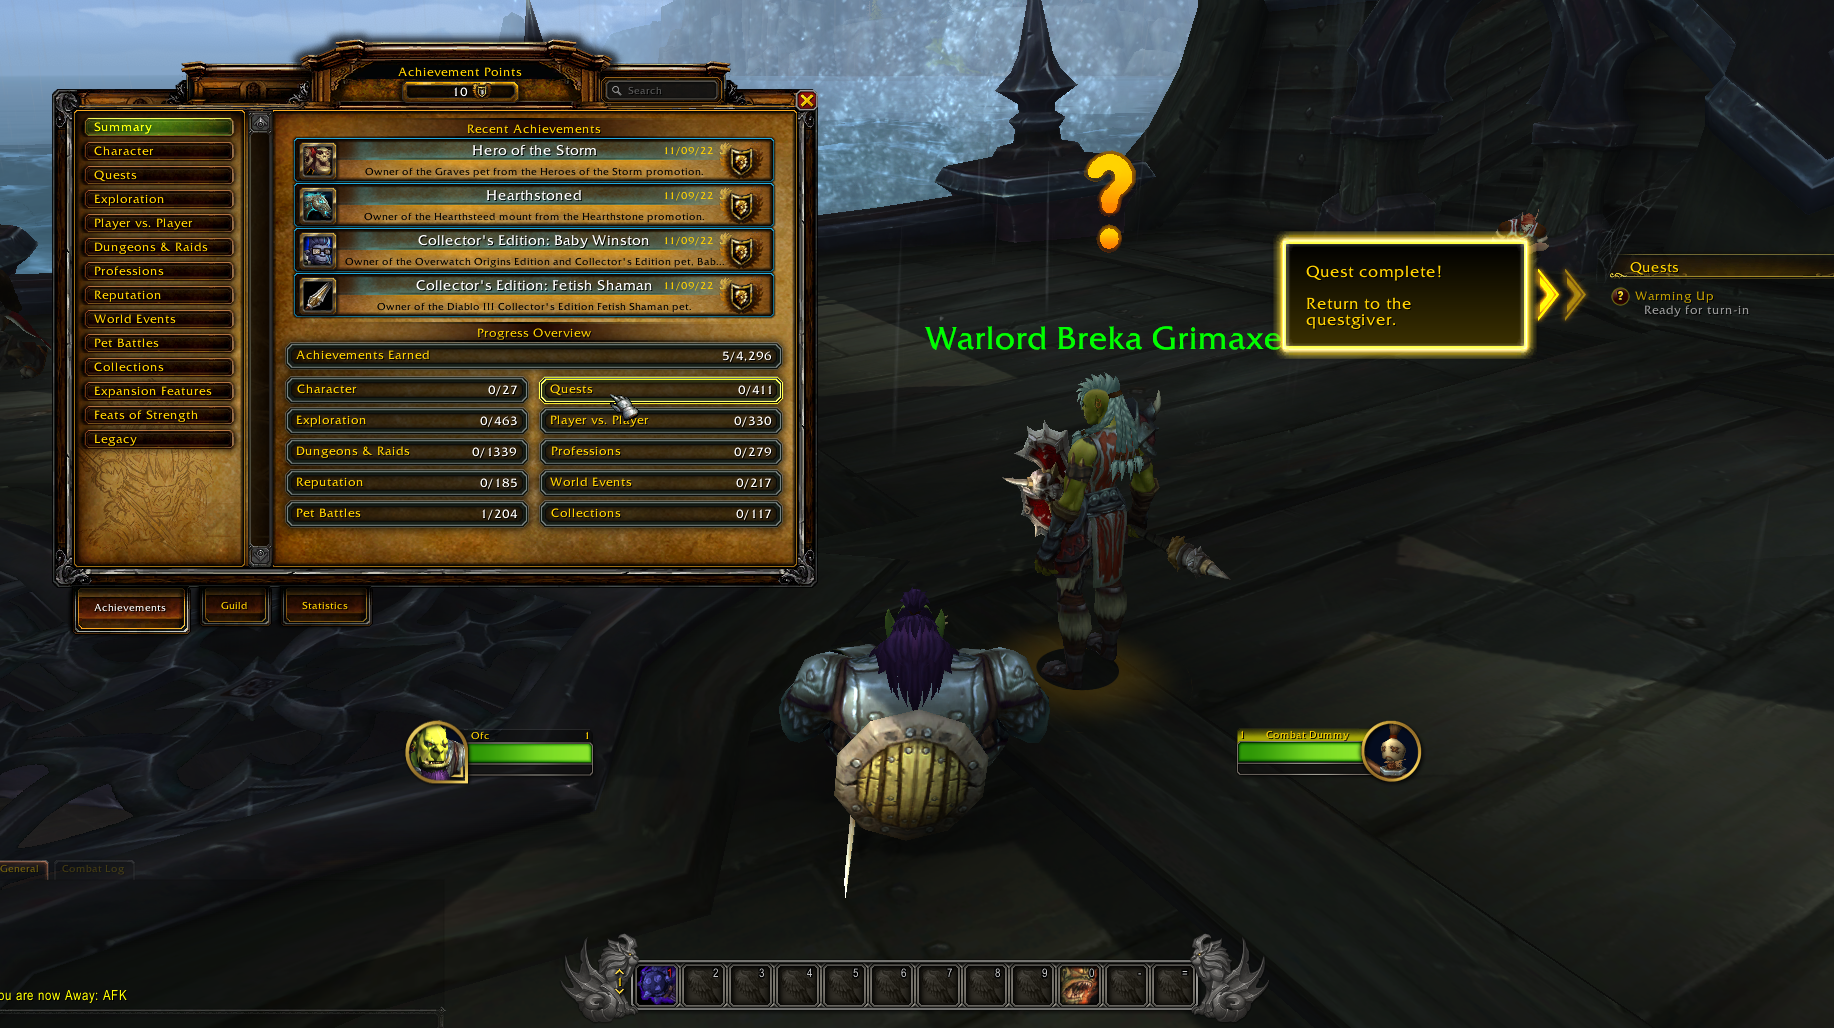 World of Warcraft Achievements - Scoring system